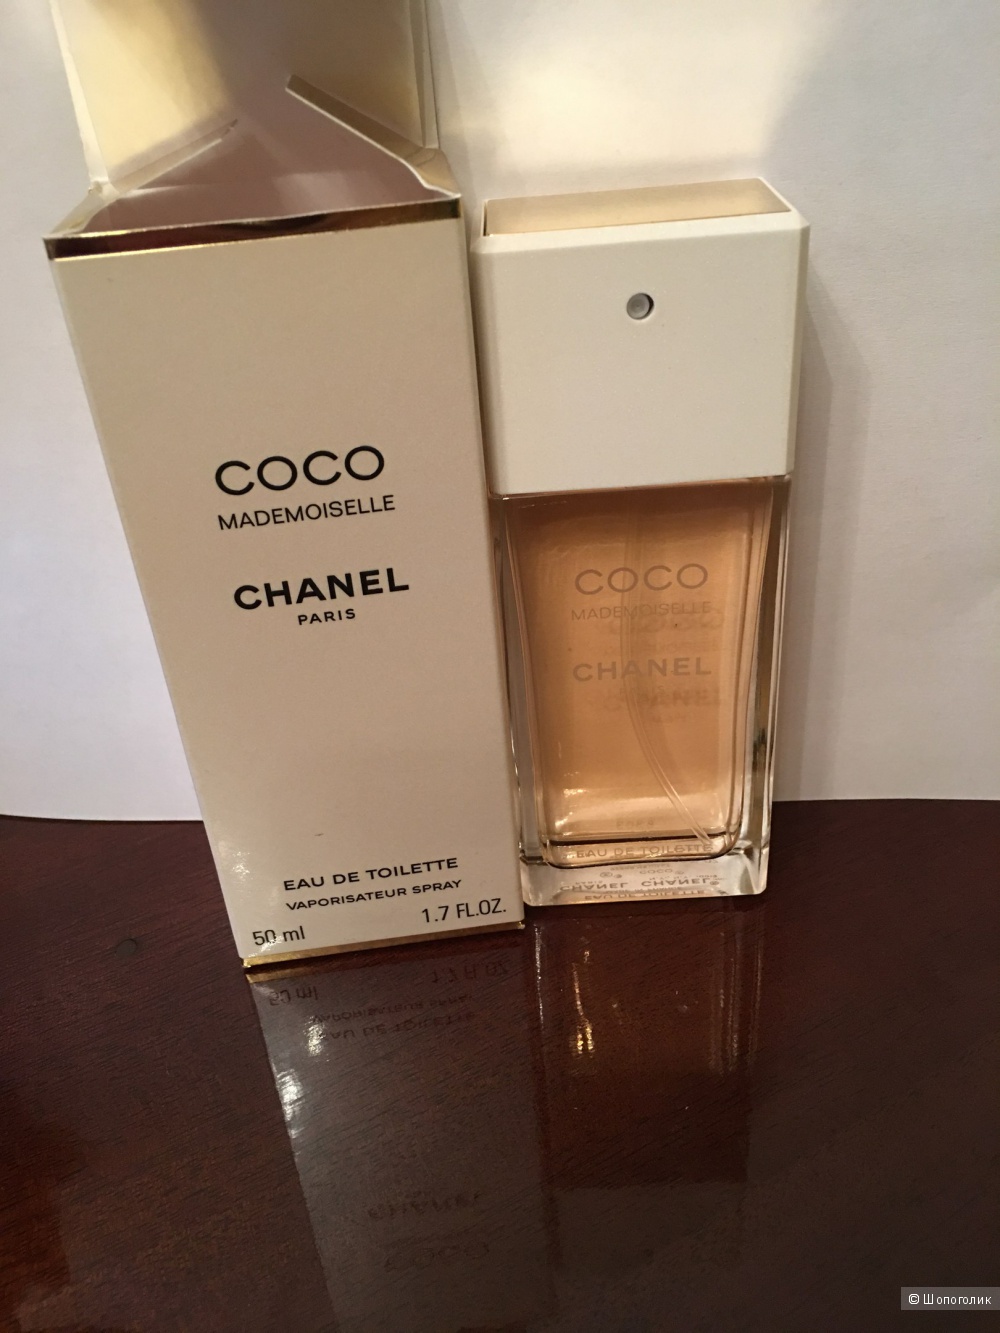 Chanel Coco Mademoiselle EDT Spray 50ml